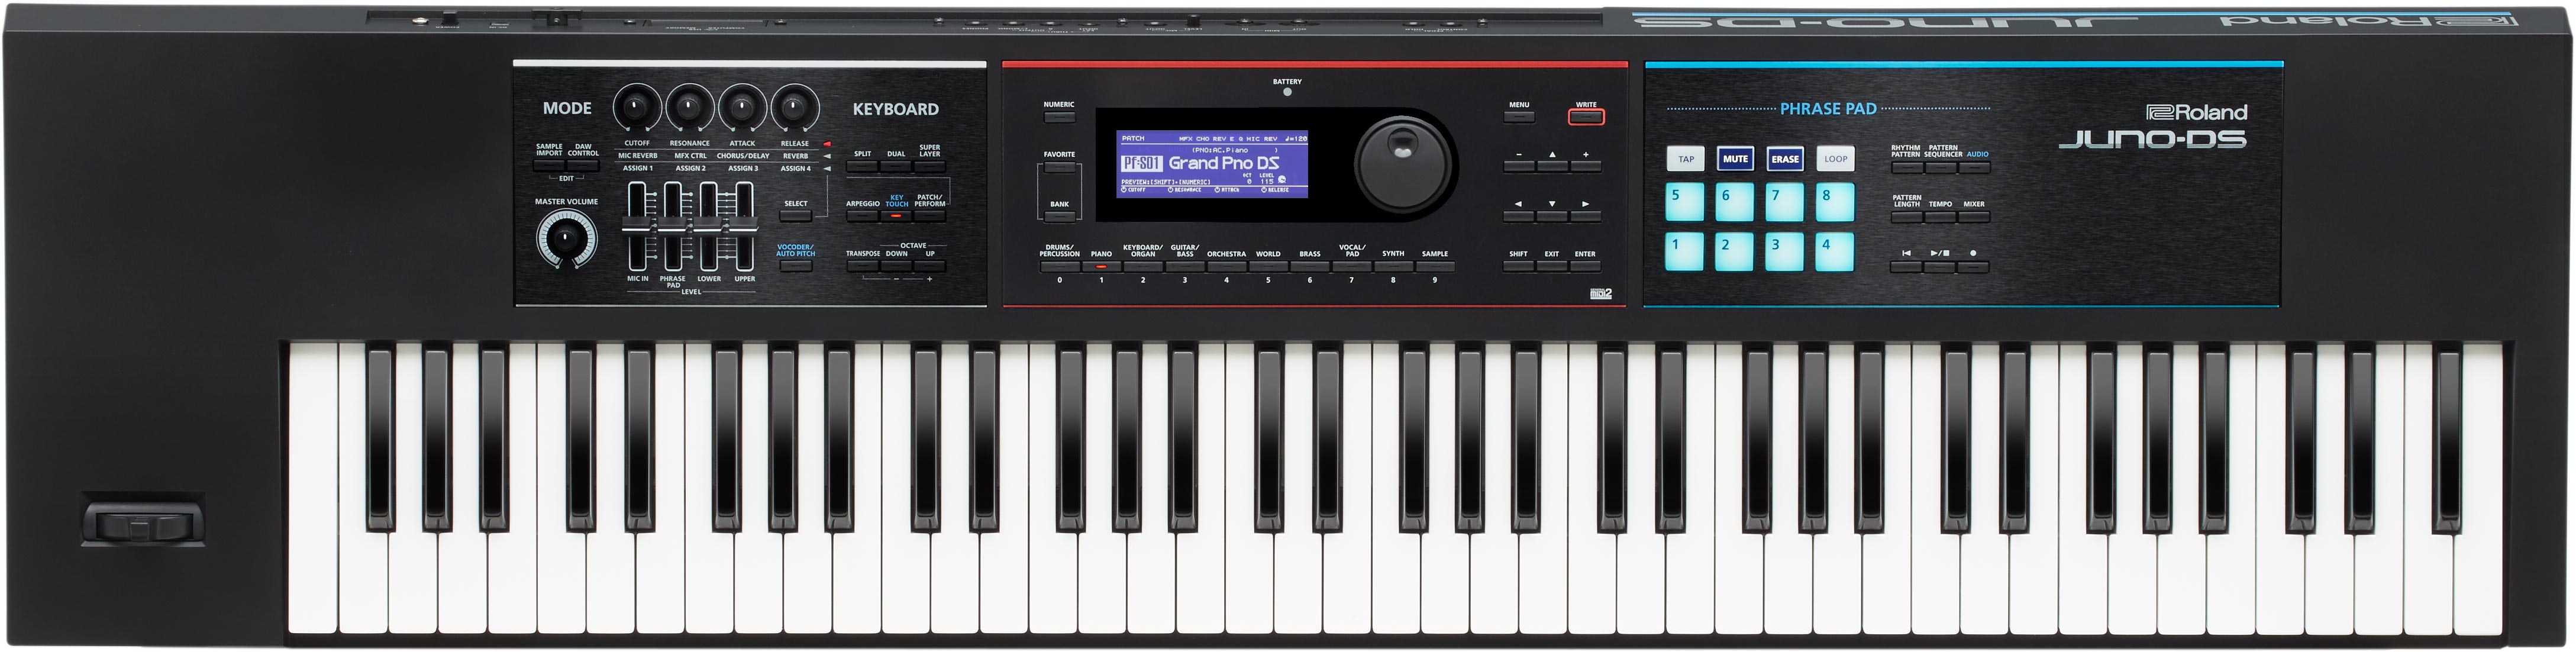 Roland Juno DS-76 Synthesizer 761294513507 | eBay